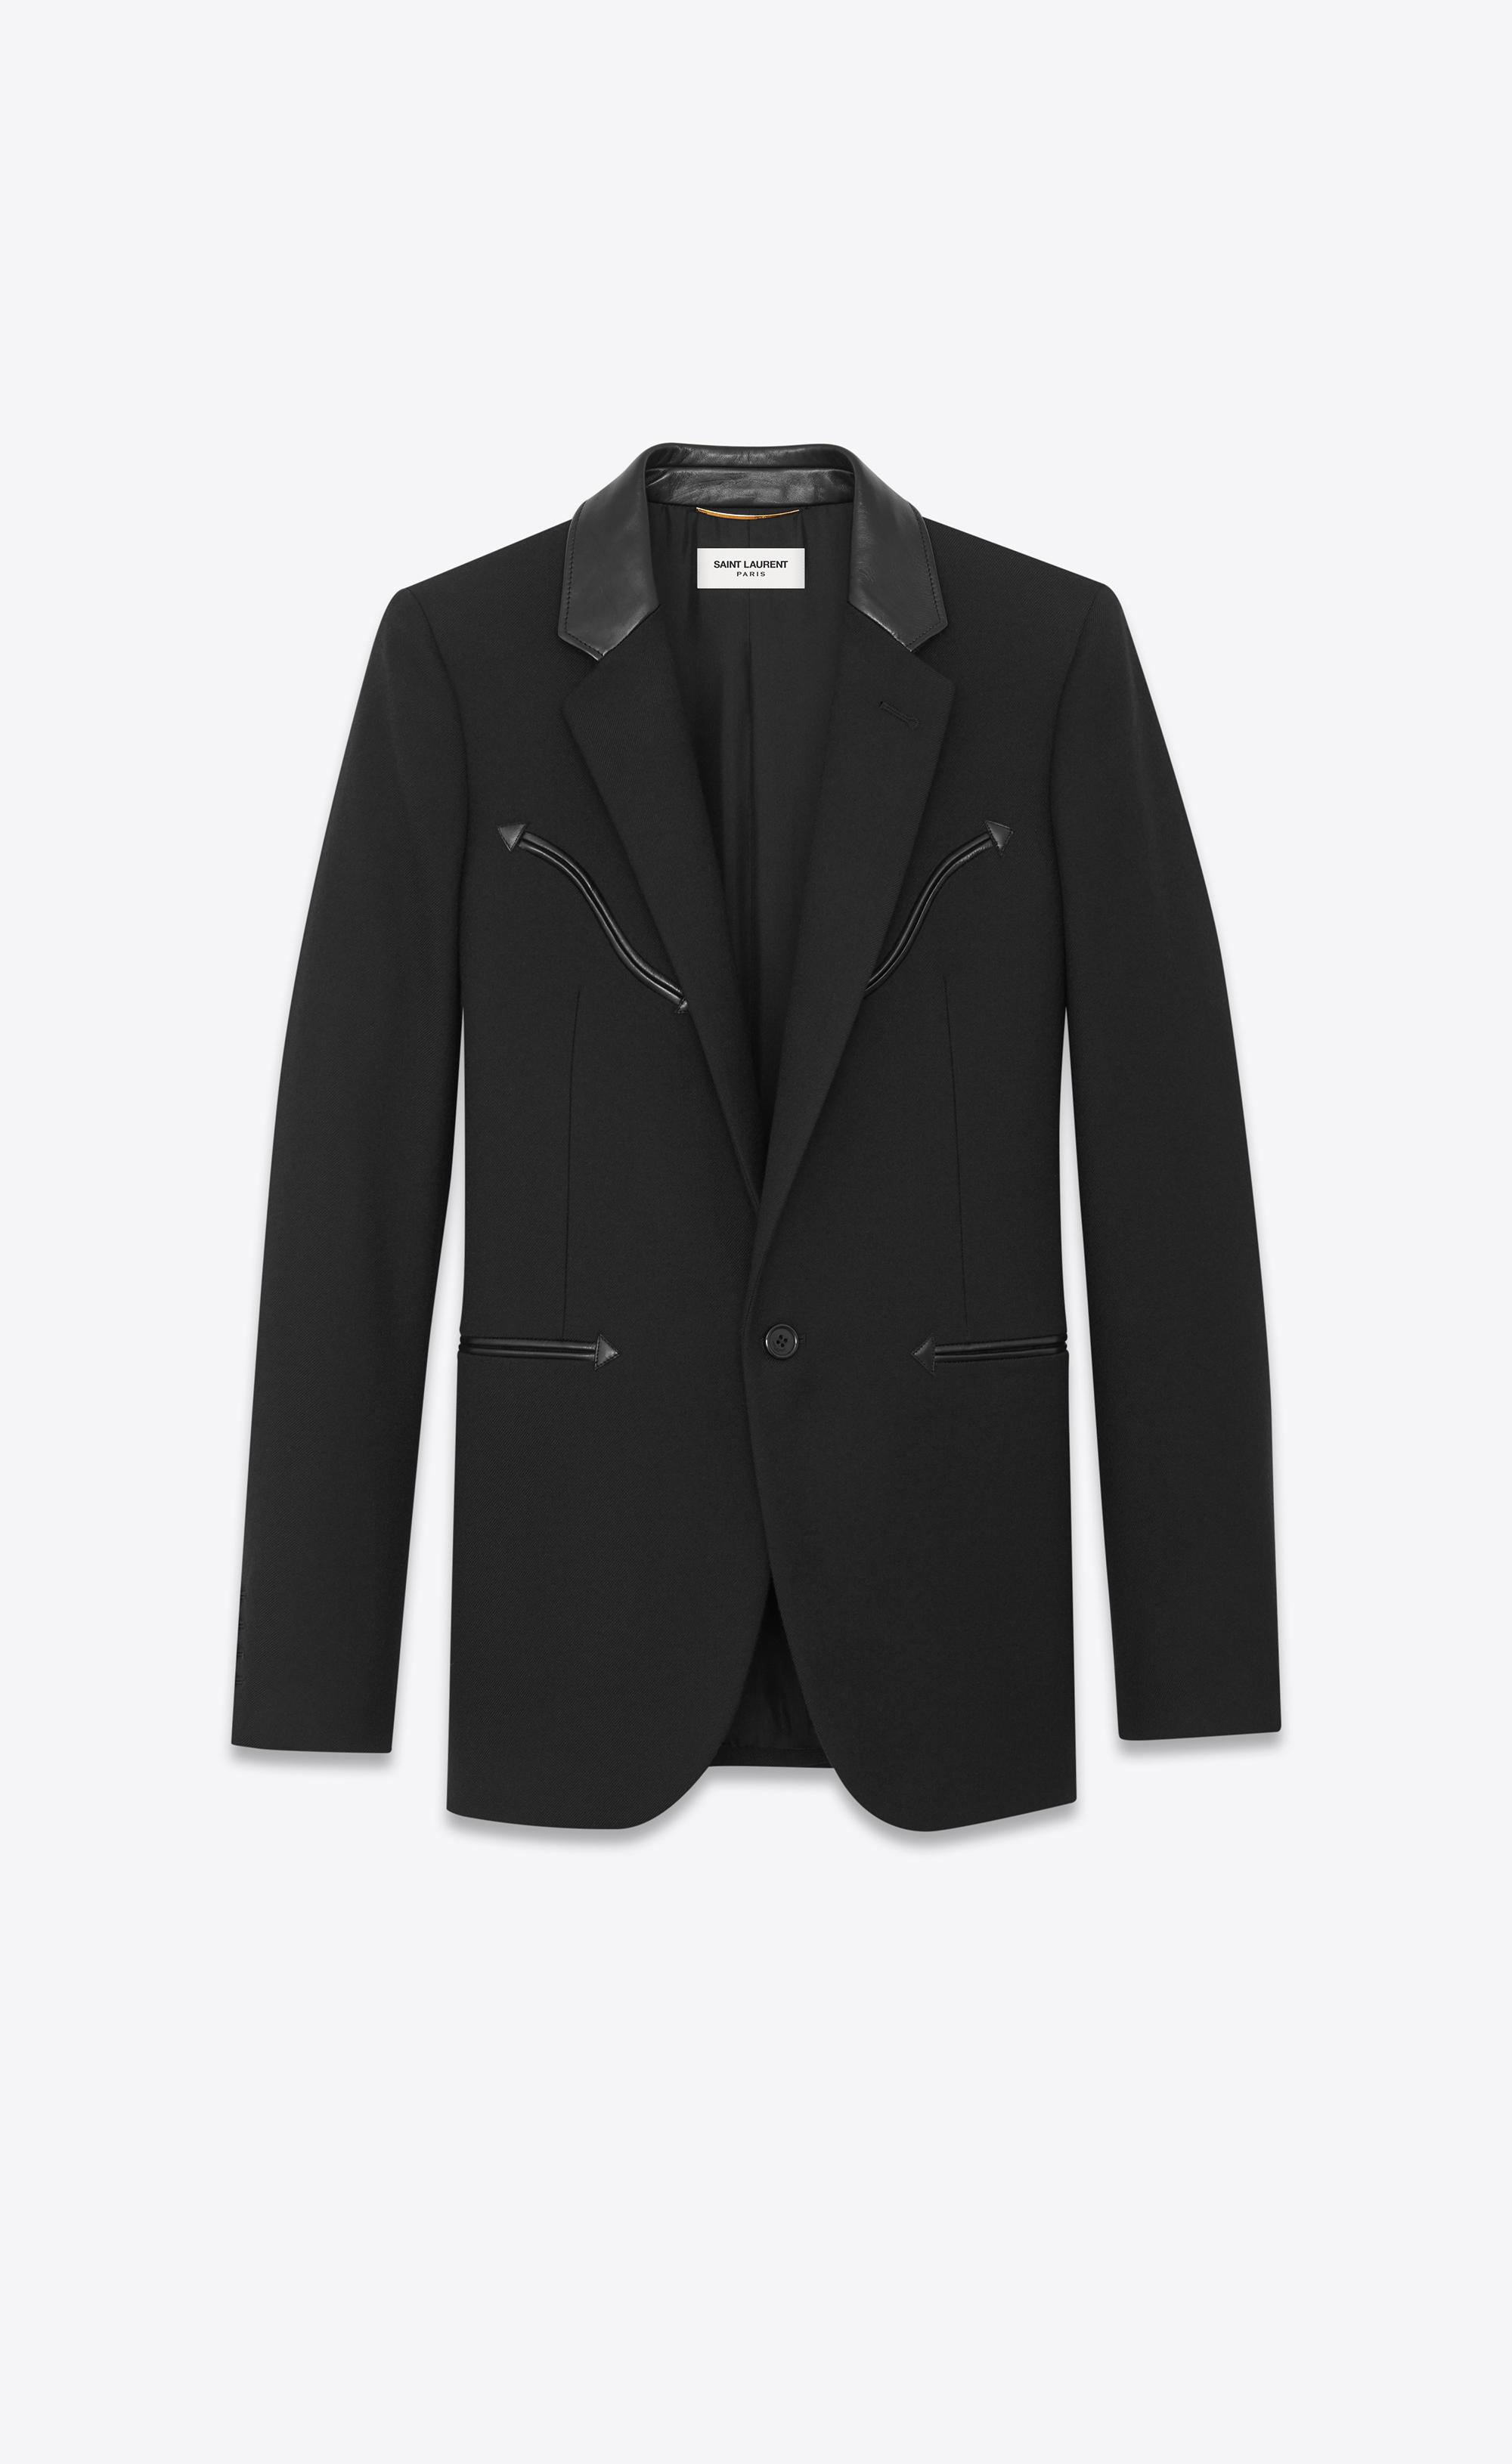 Saint Laurent Leather Collared Utility Jacket